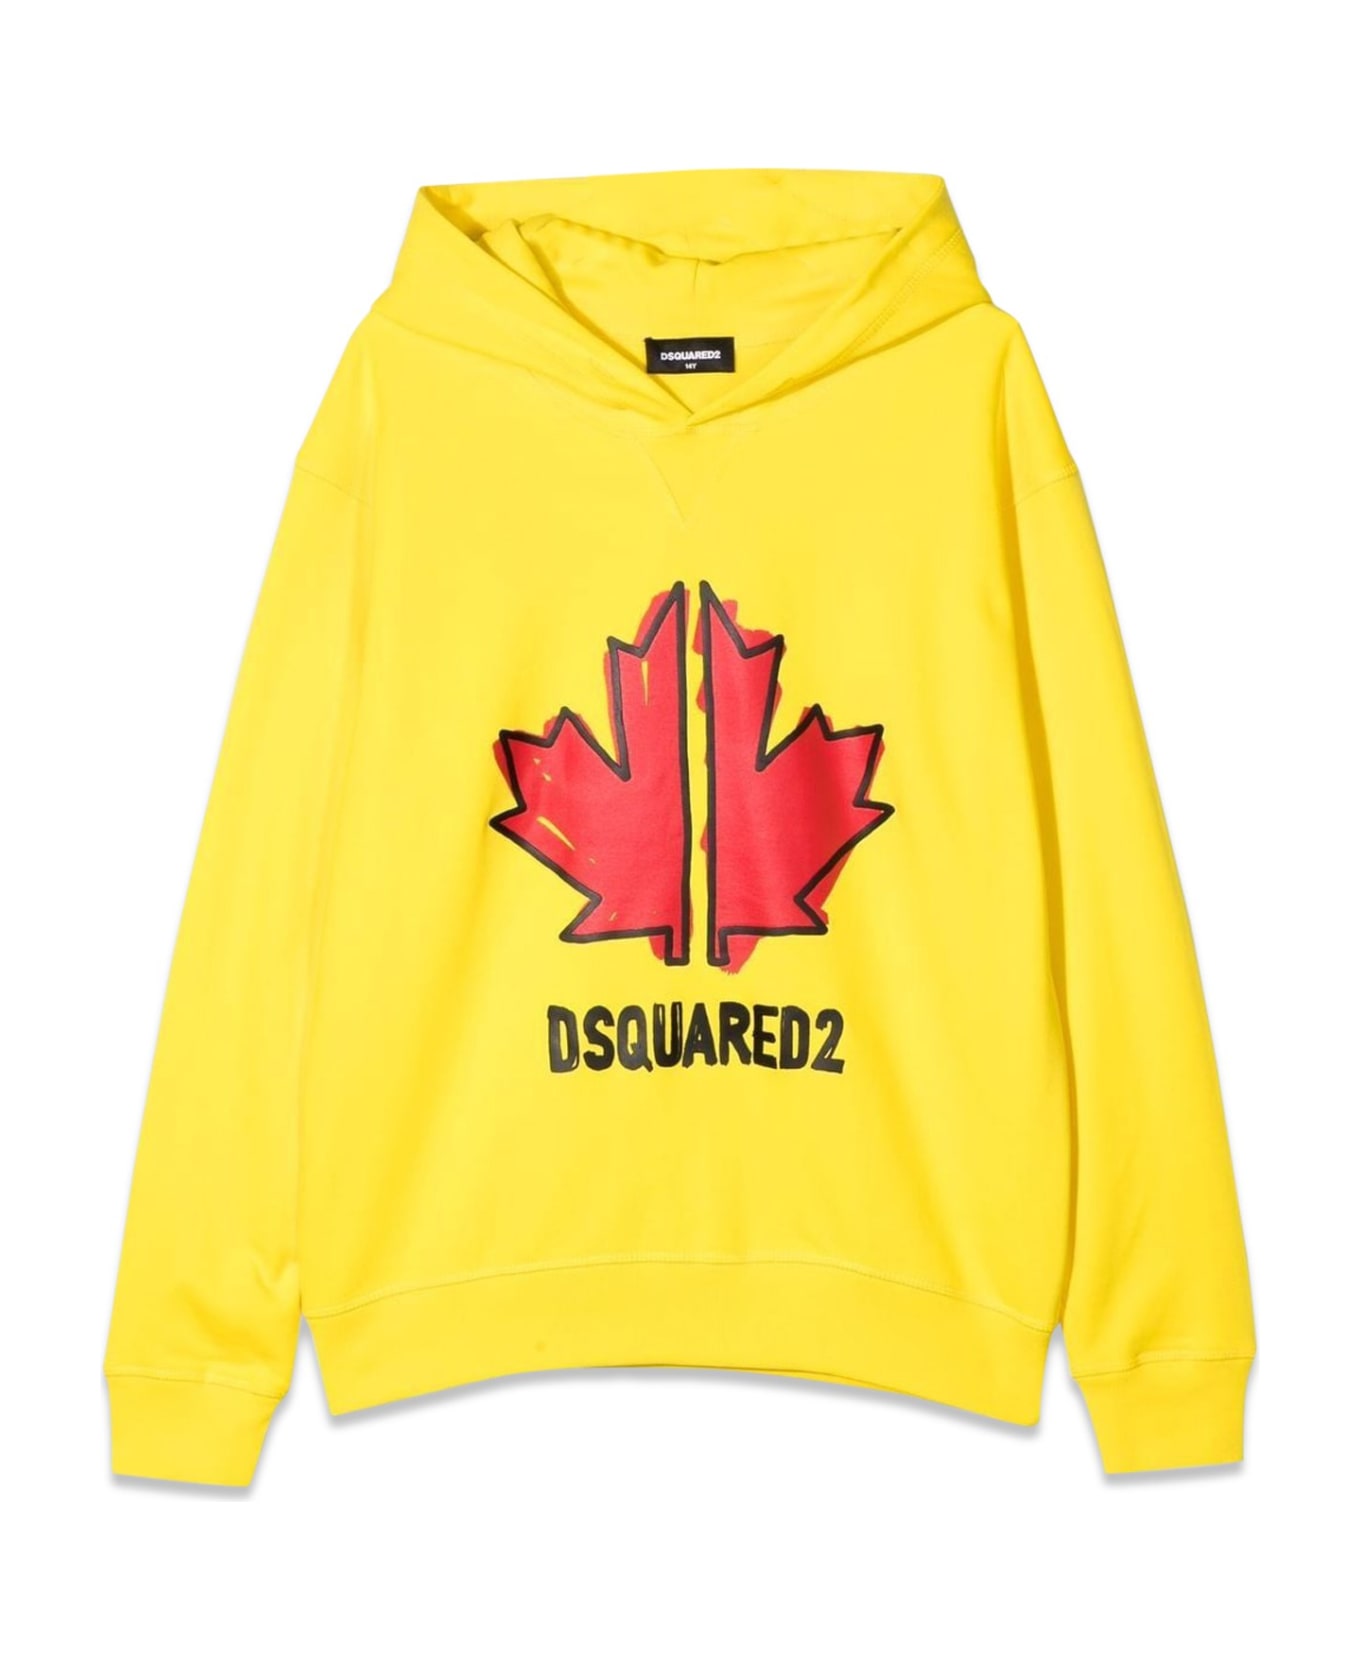 Dsquared2 Sweatshirt - GIALLO